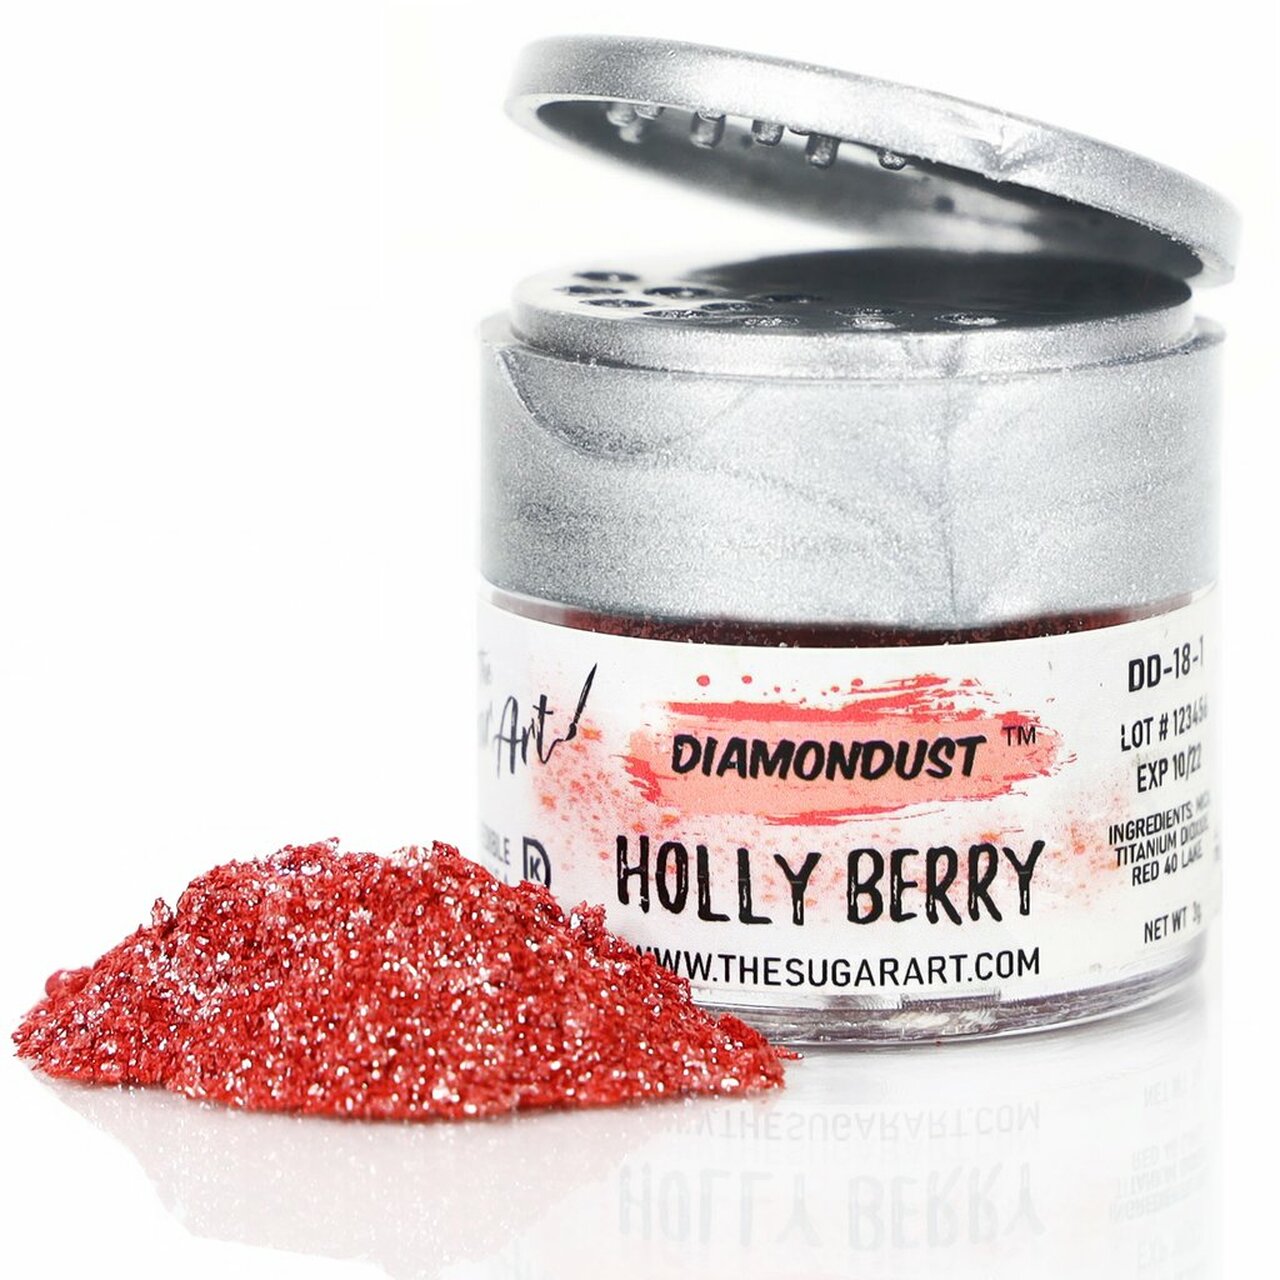 Holly Berry Diamondust